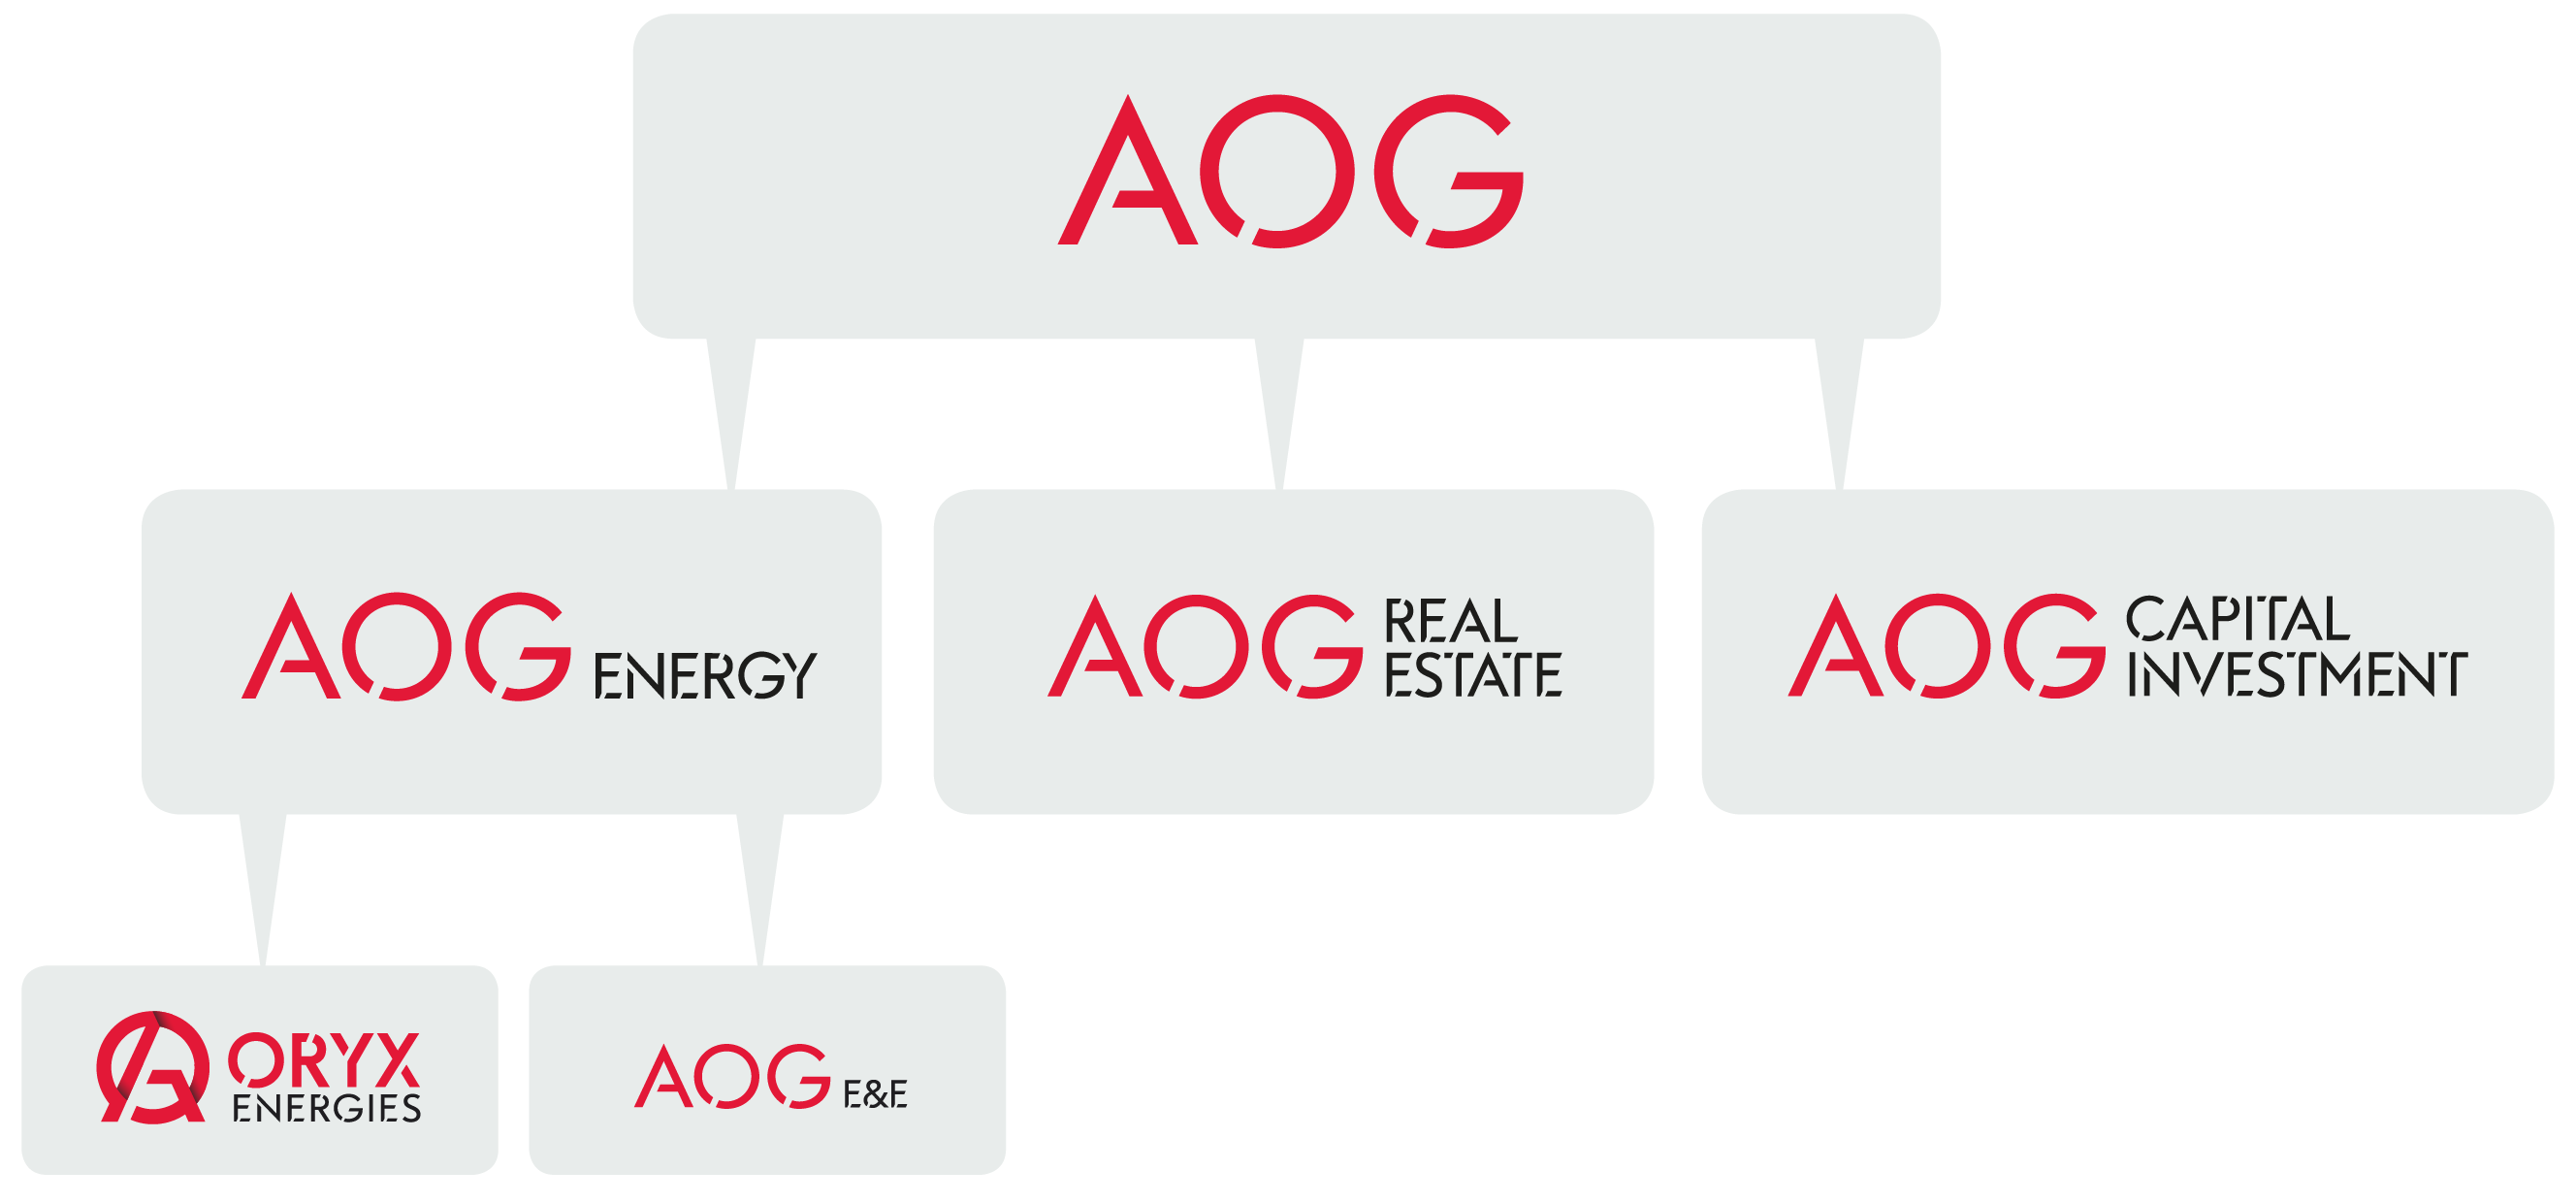 AOG organisation